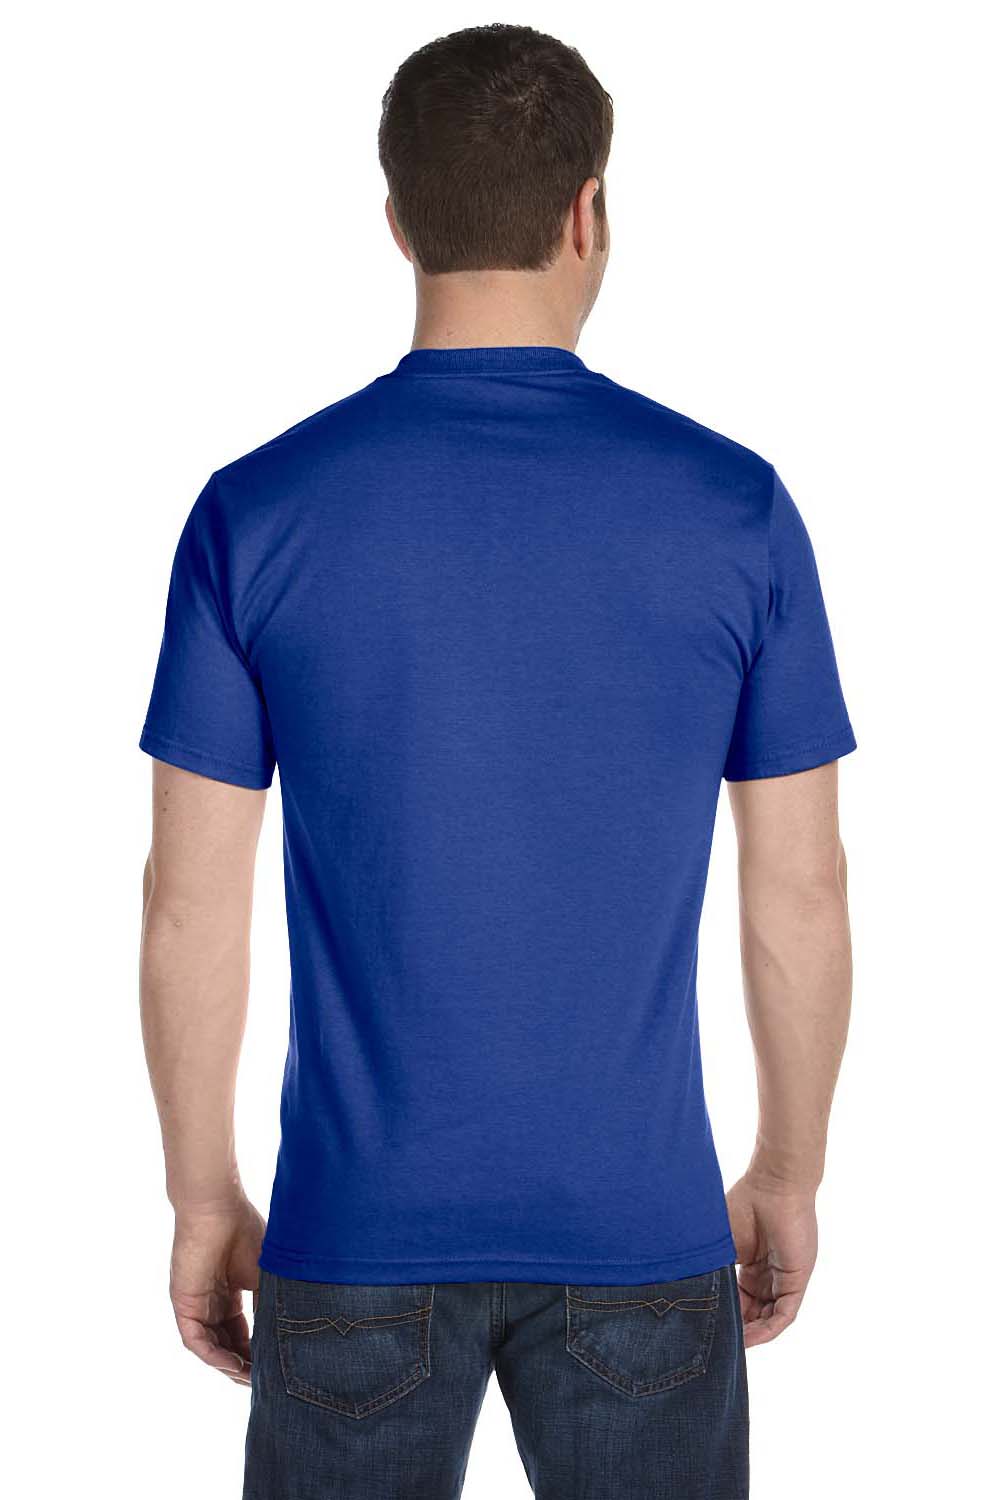 Hanes 5180 Mens Beefy-T Short Sleeve Crewneck T-Shirt Royal Blue Back